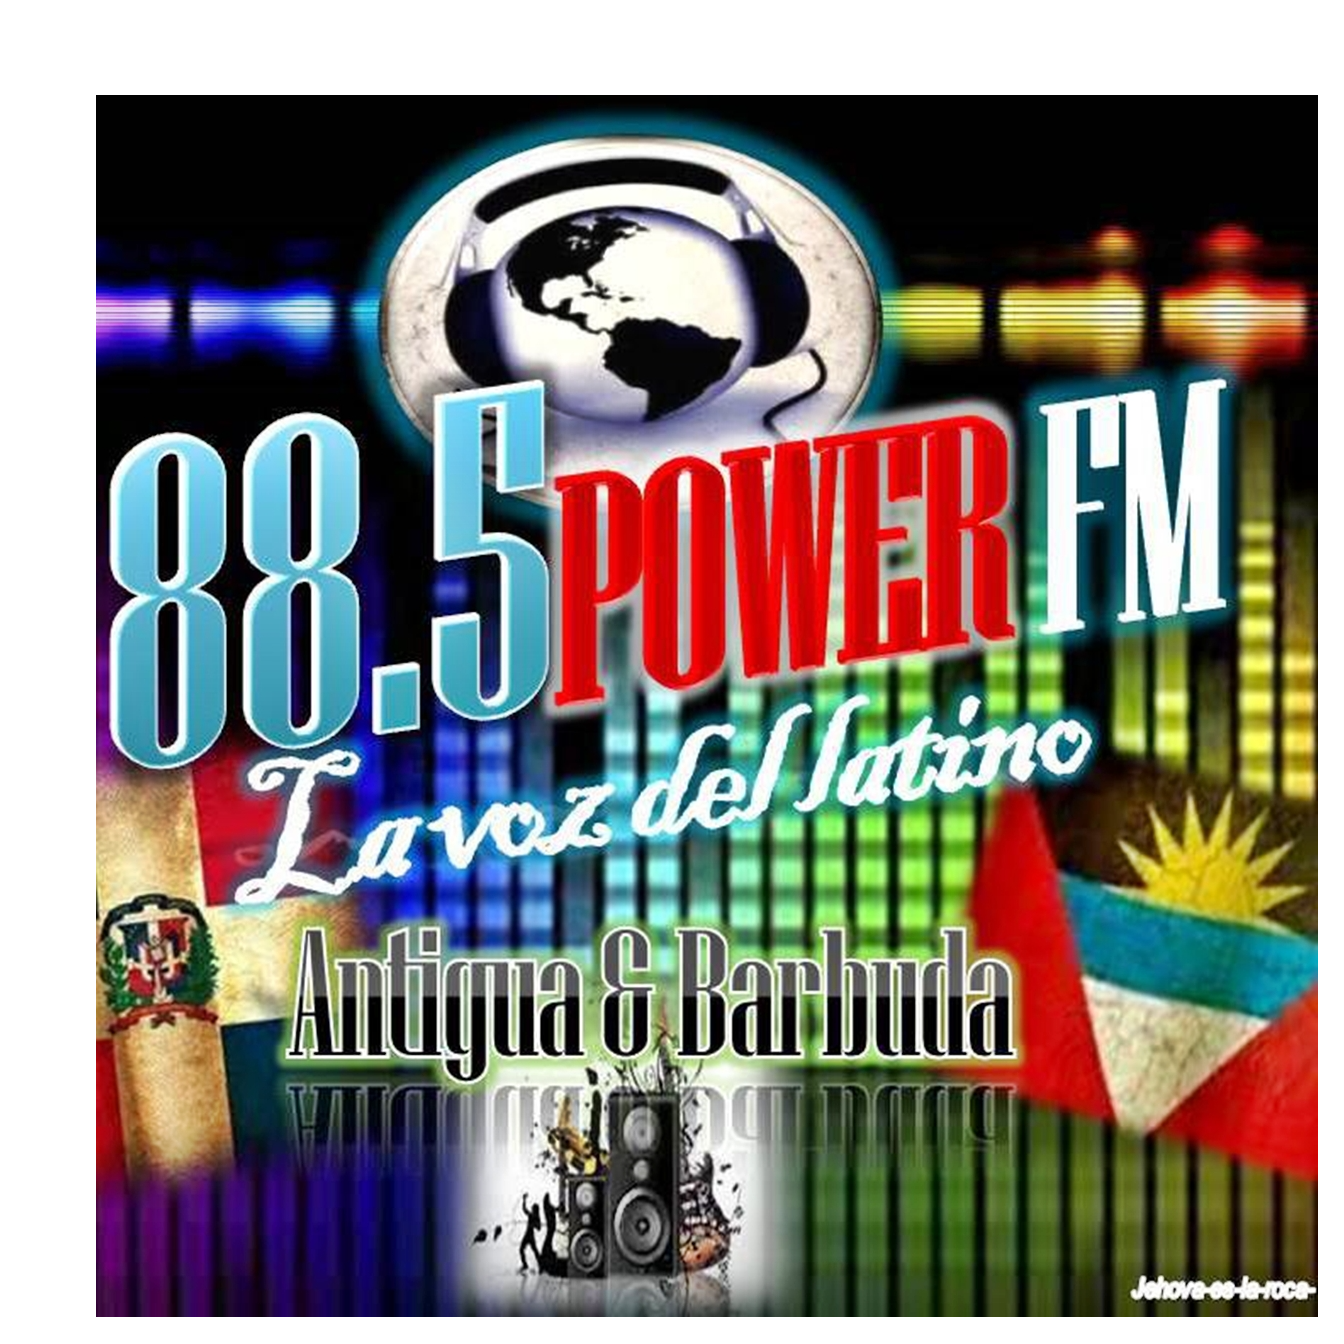 Power 88.5 FM